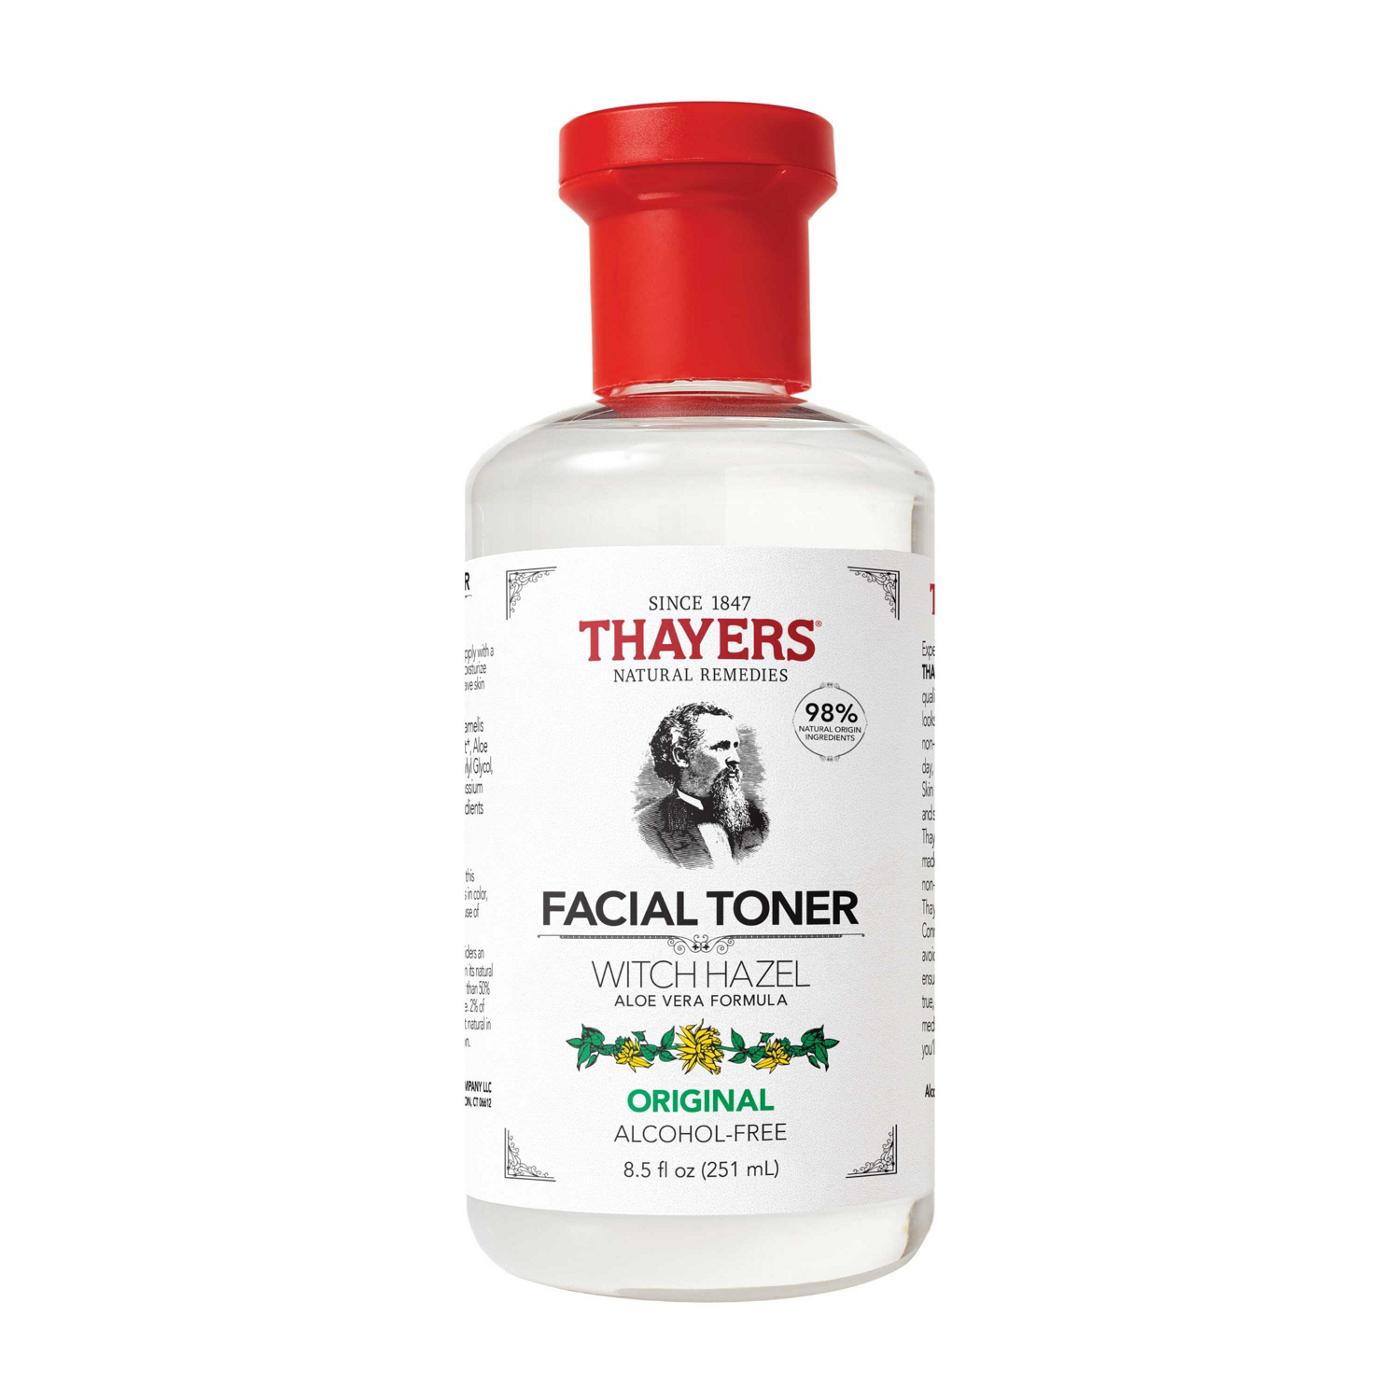 Thayers Facial Toner - Original; image 1 of 2